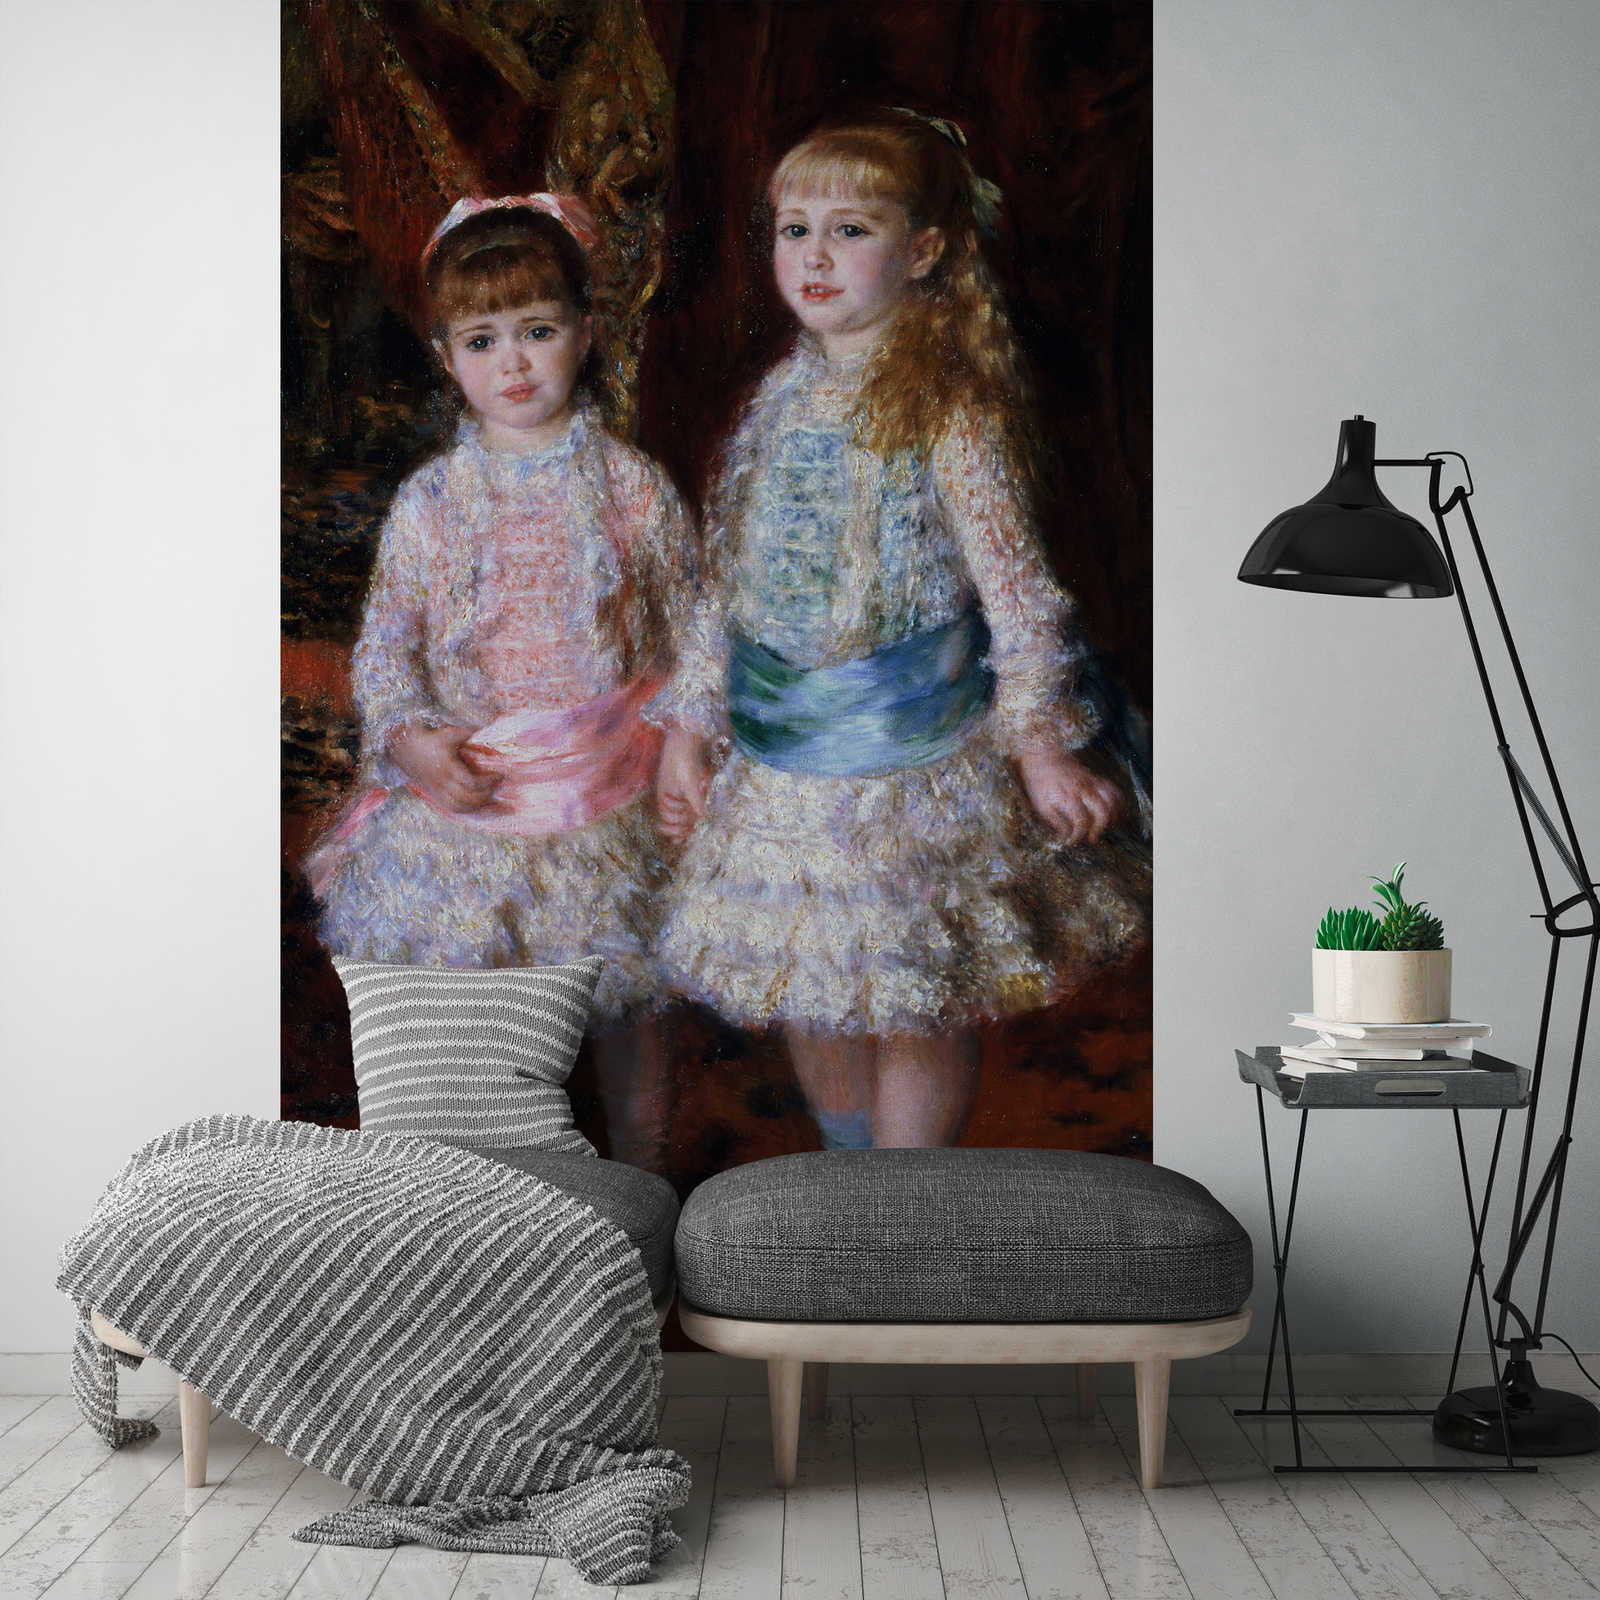             Photo wallpaper "The girls of Cahen d'Anvers" by Pierre Auguste Renoir
        